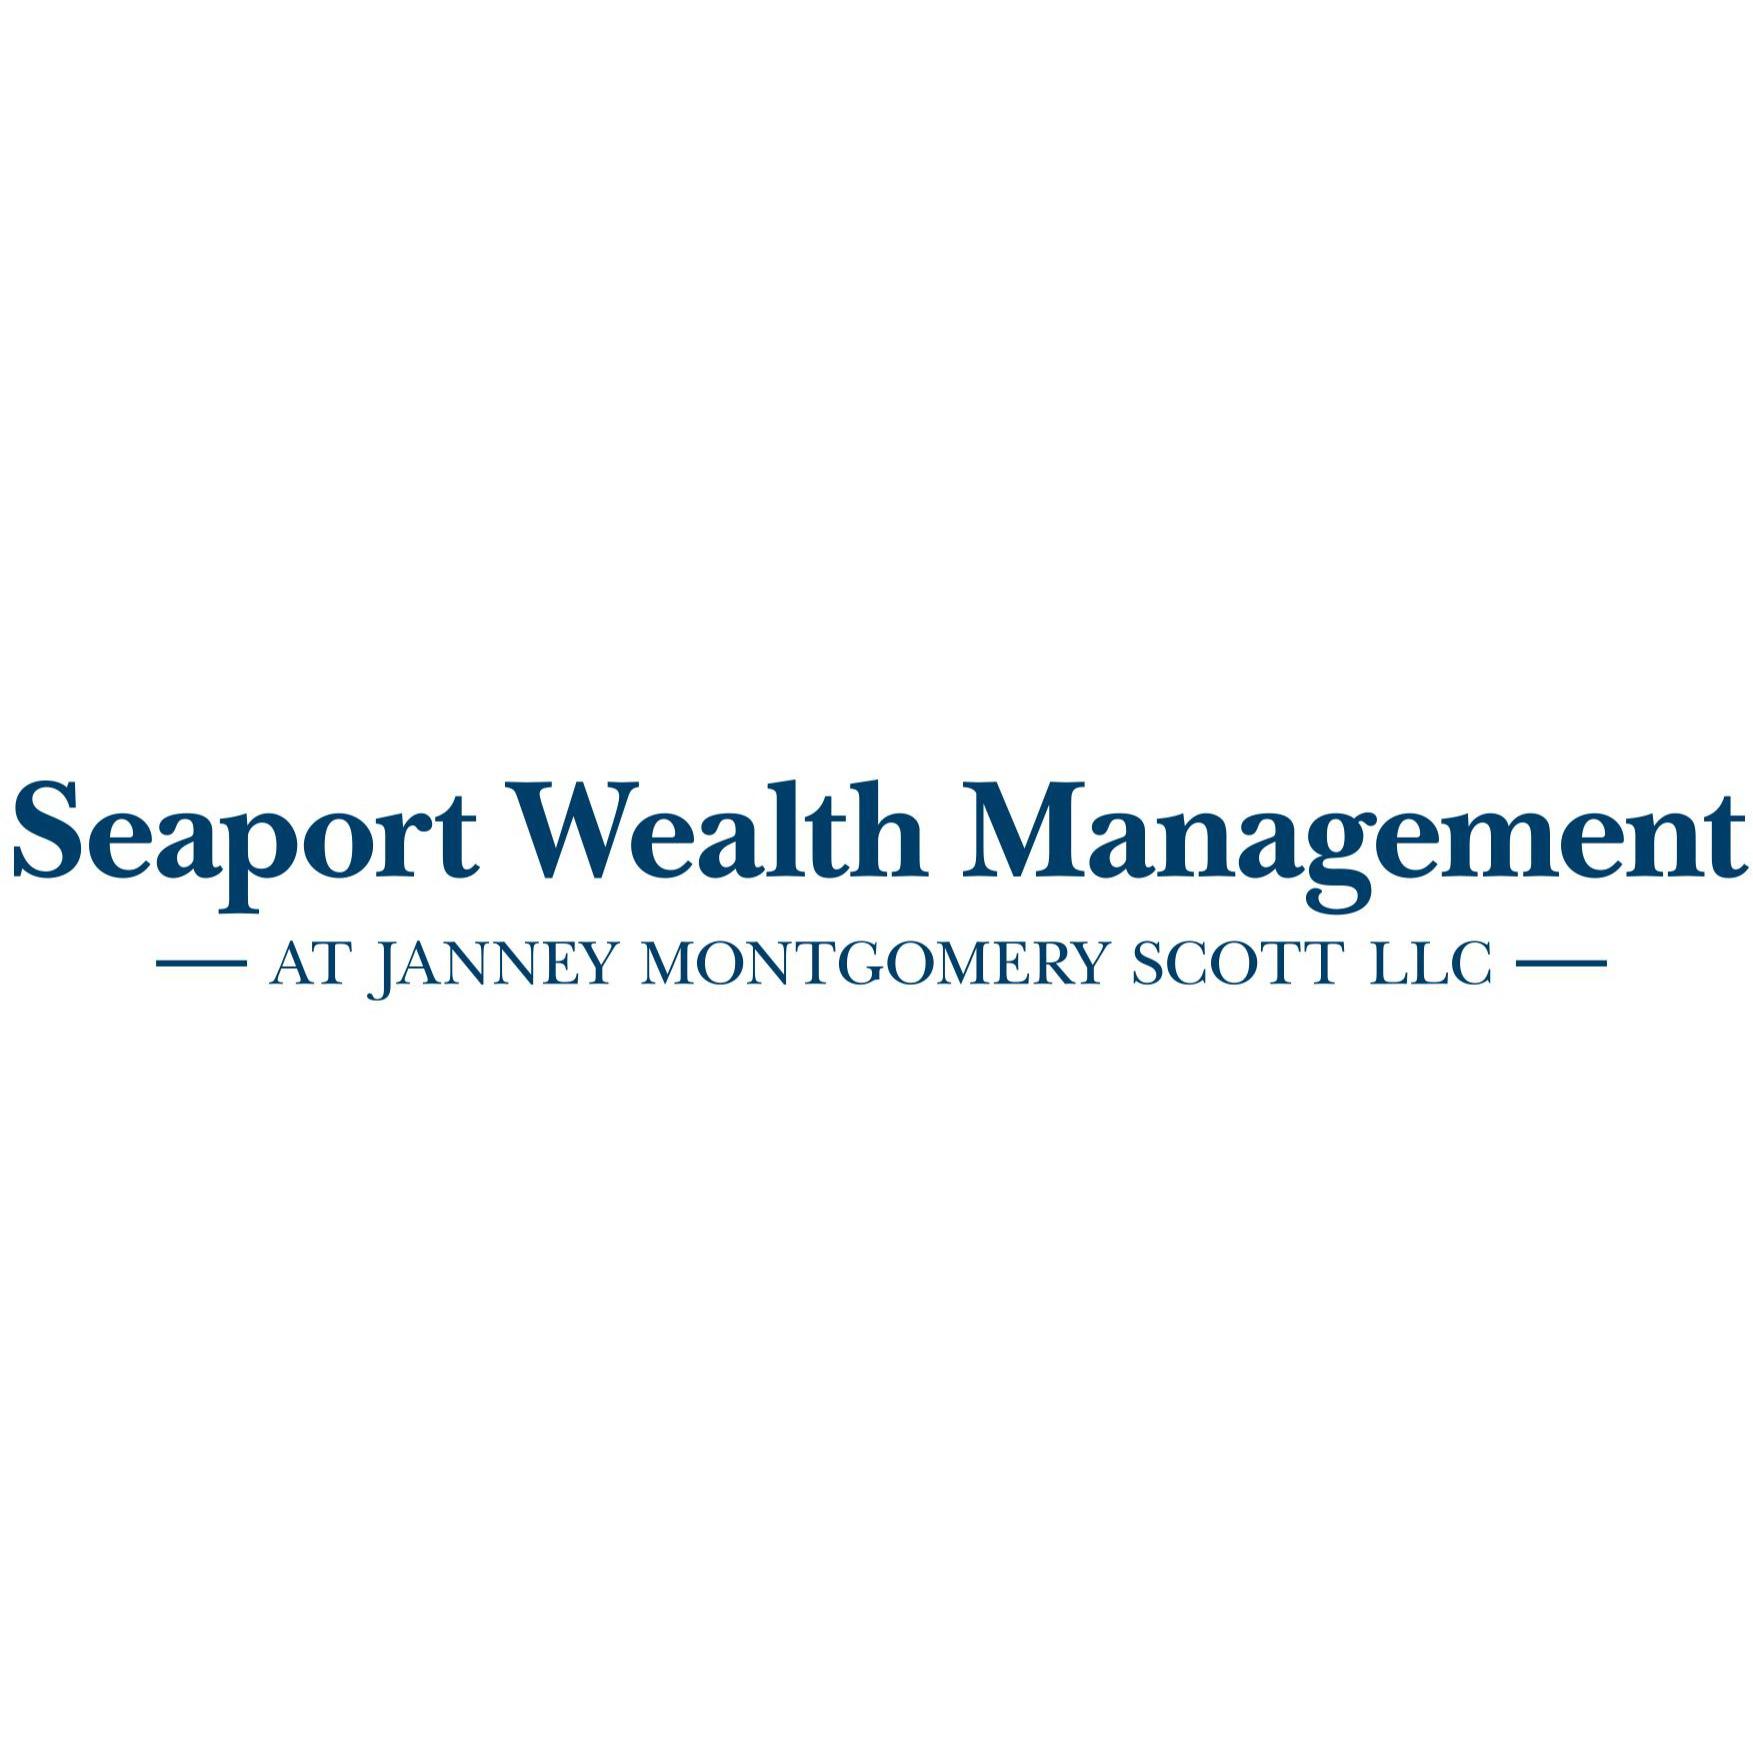 Seaport Wealth Management of Janney Montgomery Scott